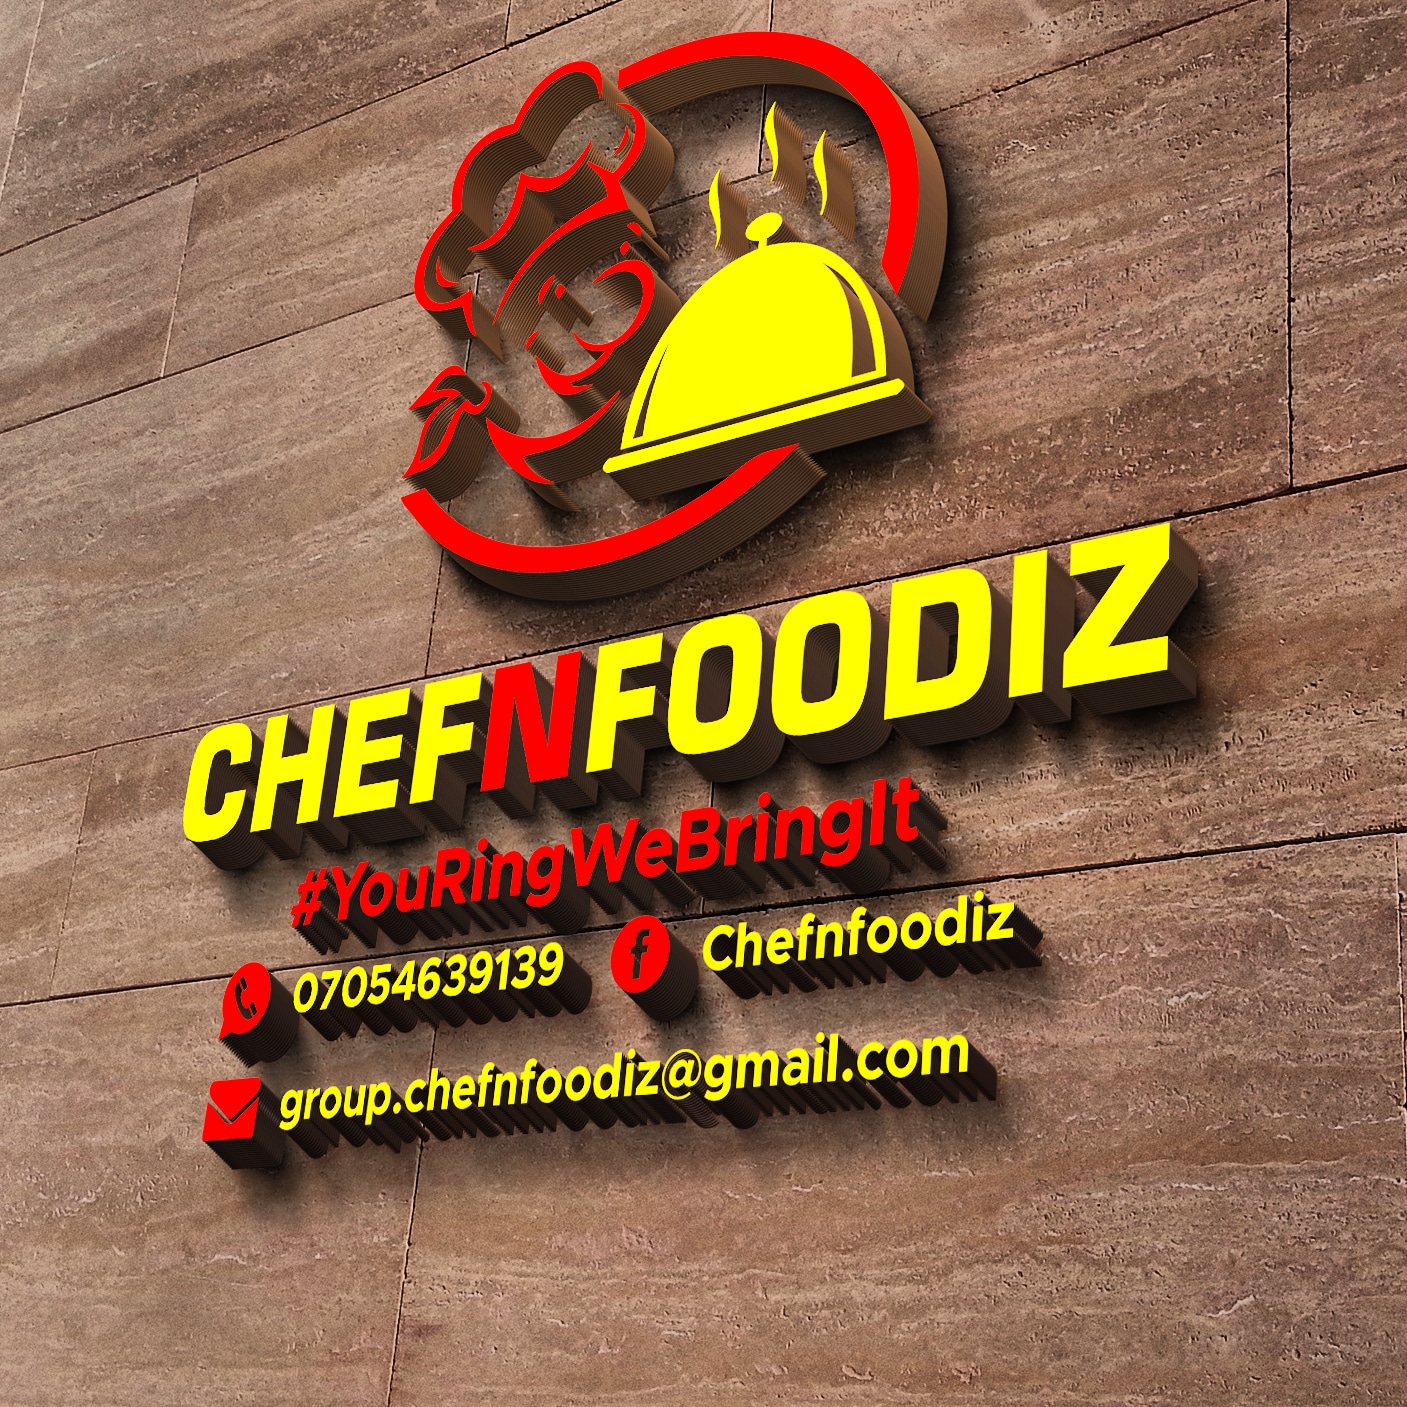 Chefnfoodiz Food service provider